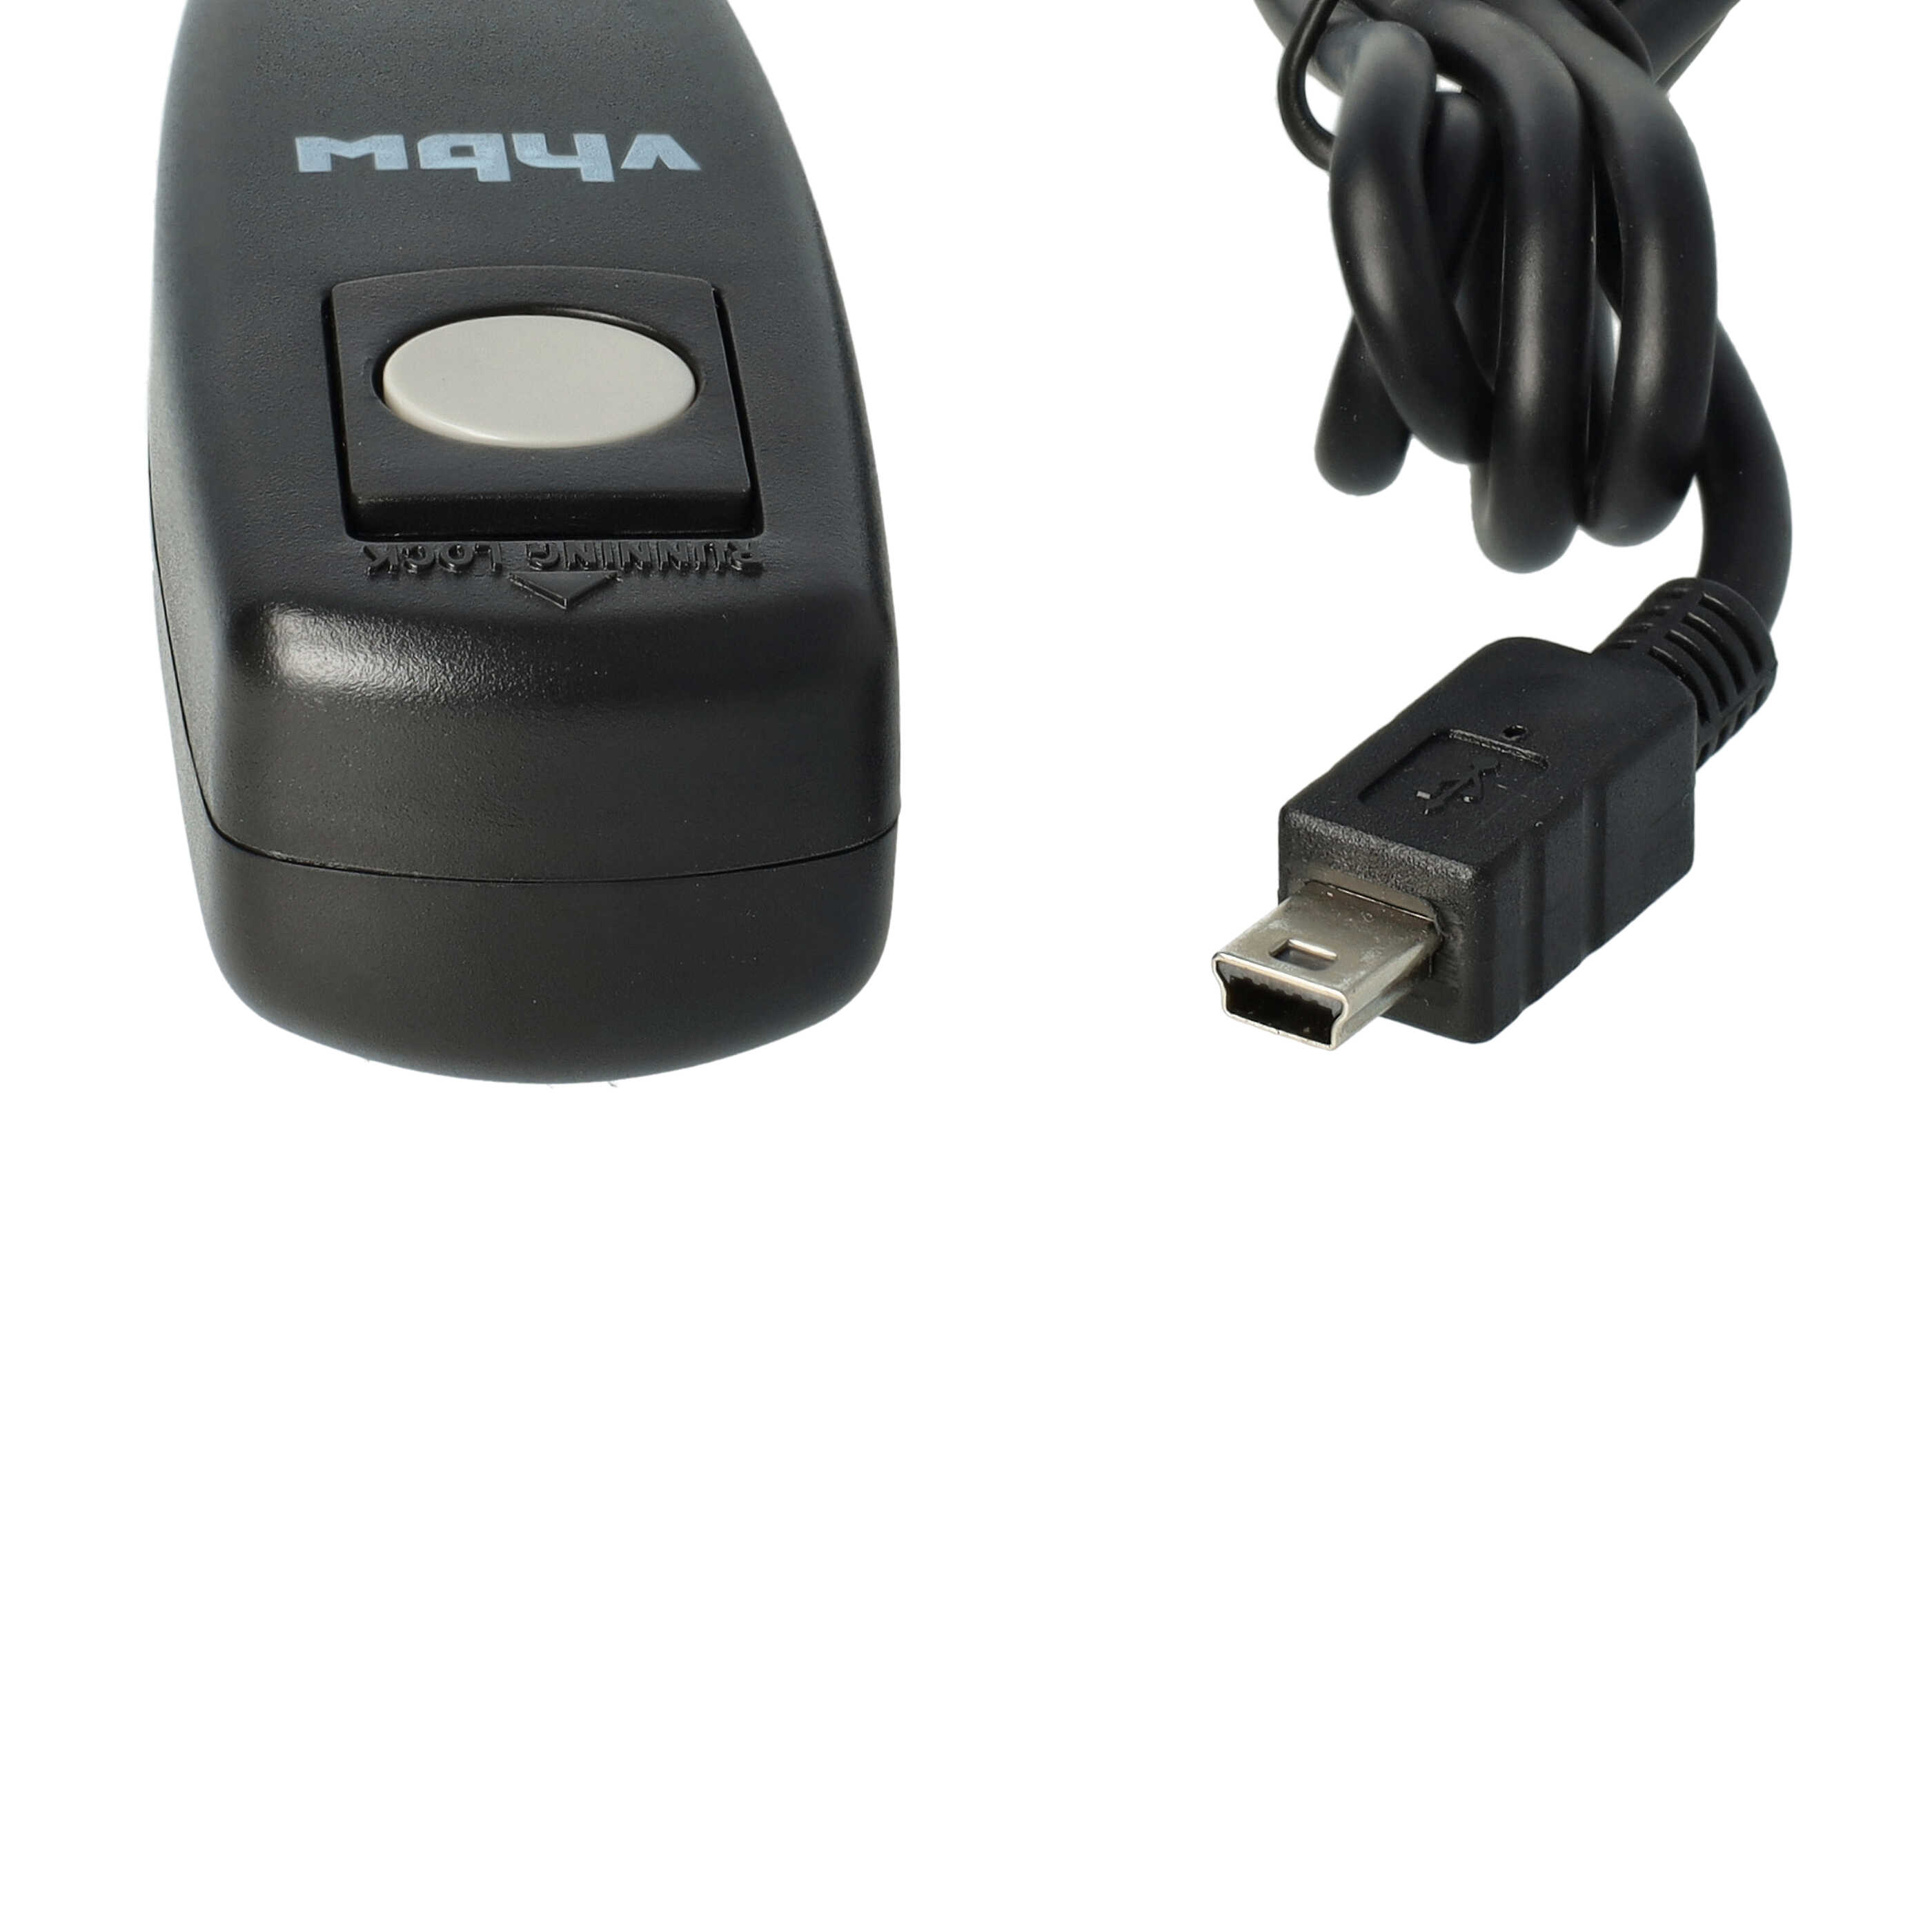 Remote Trigger as Exchange for Fuji / Fujifilm RR-80RR-80-W for Camera etc. 2-Step Shutter, 0.9 m Lead